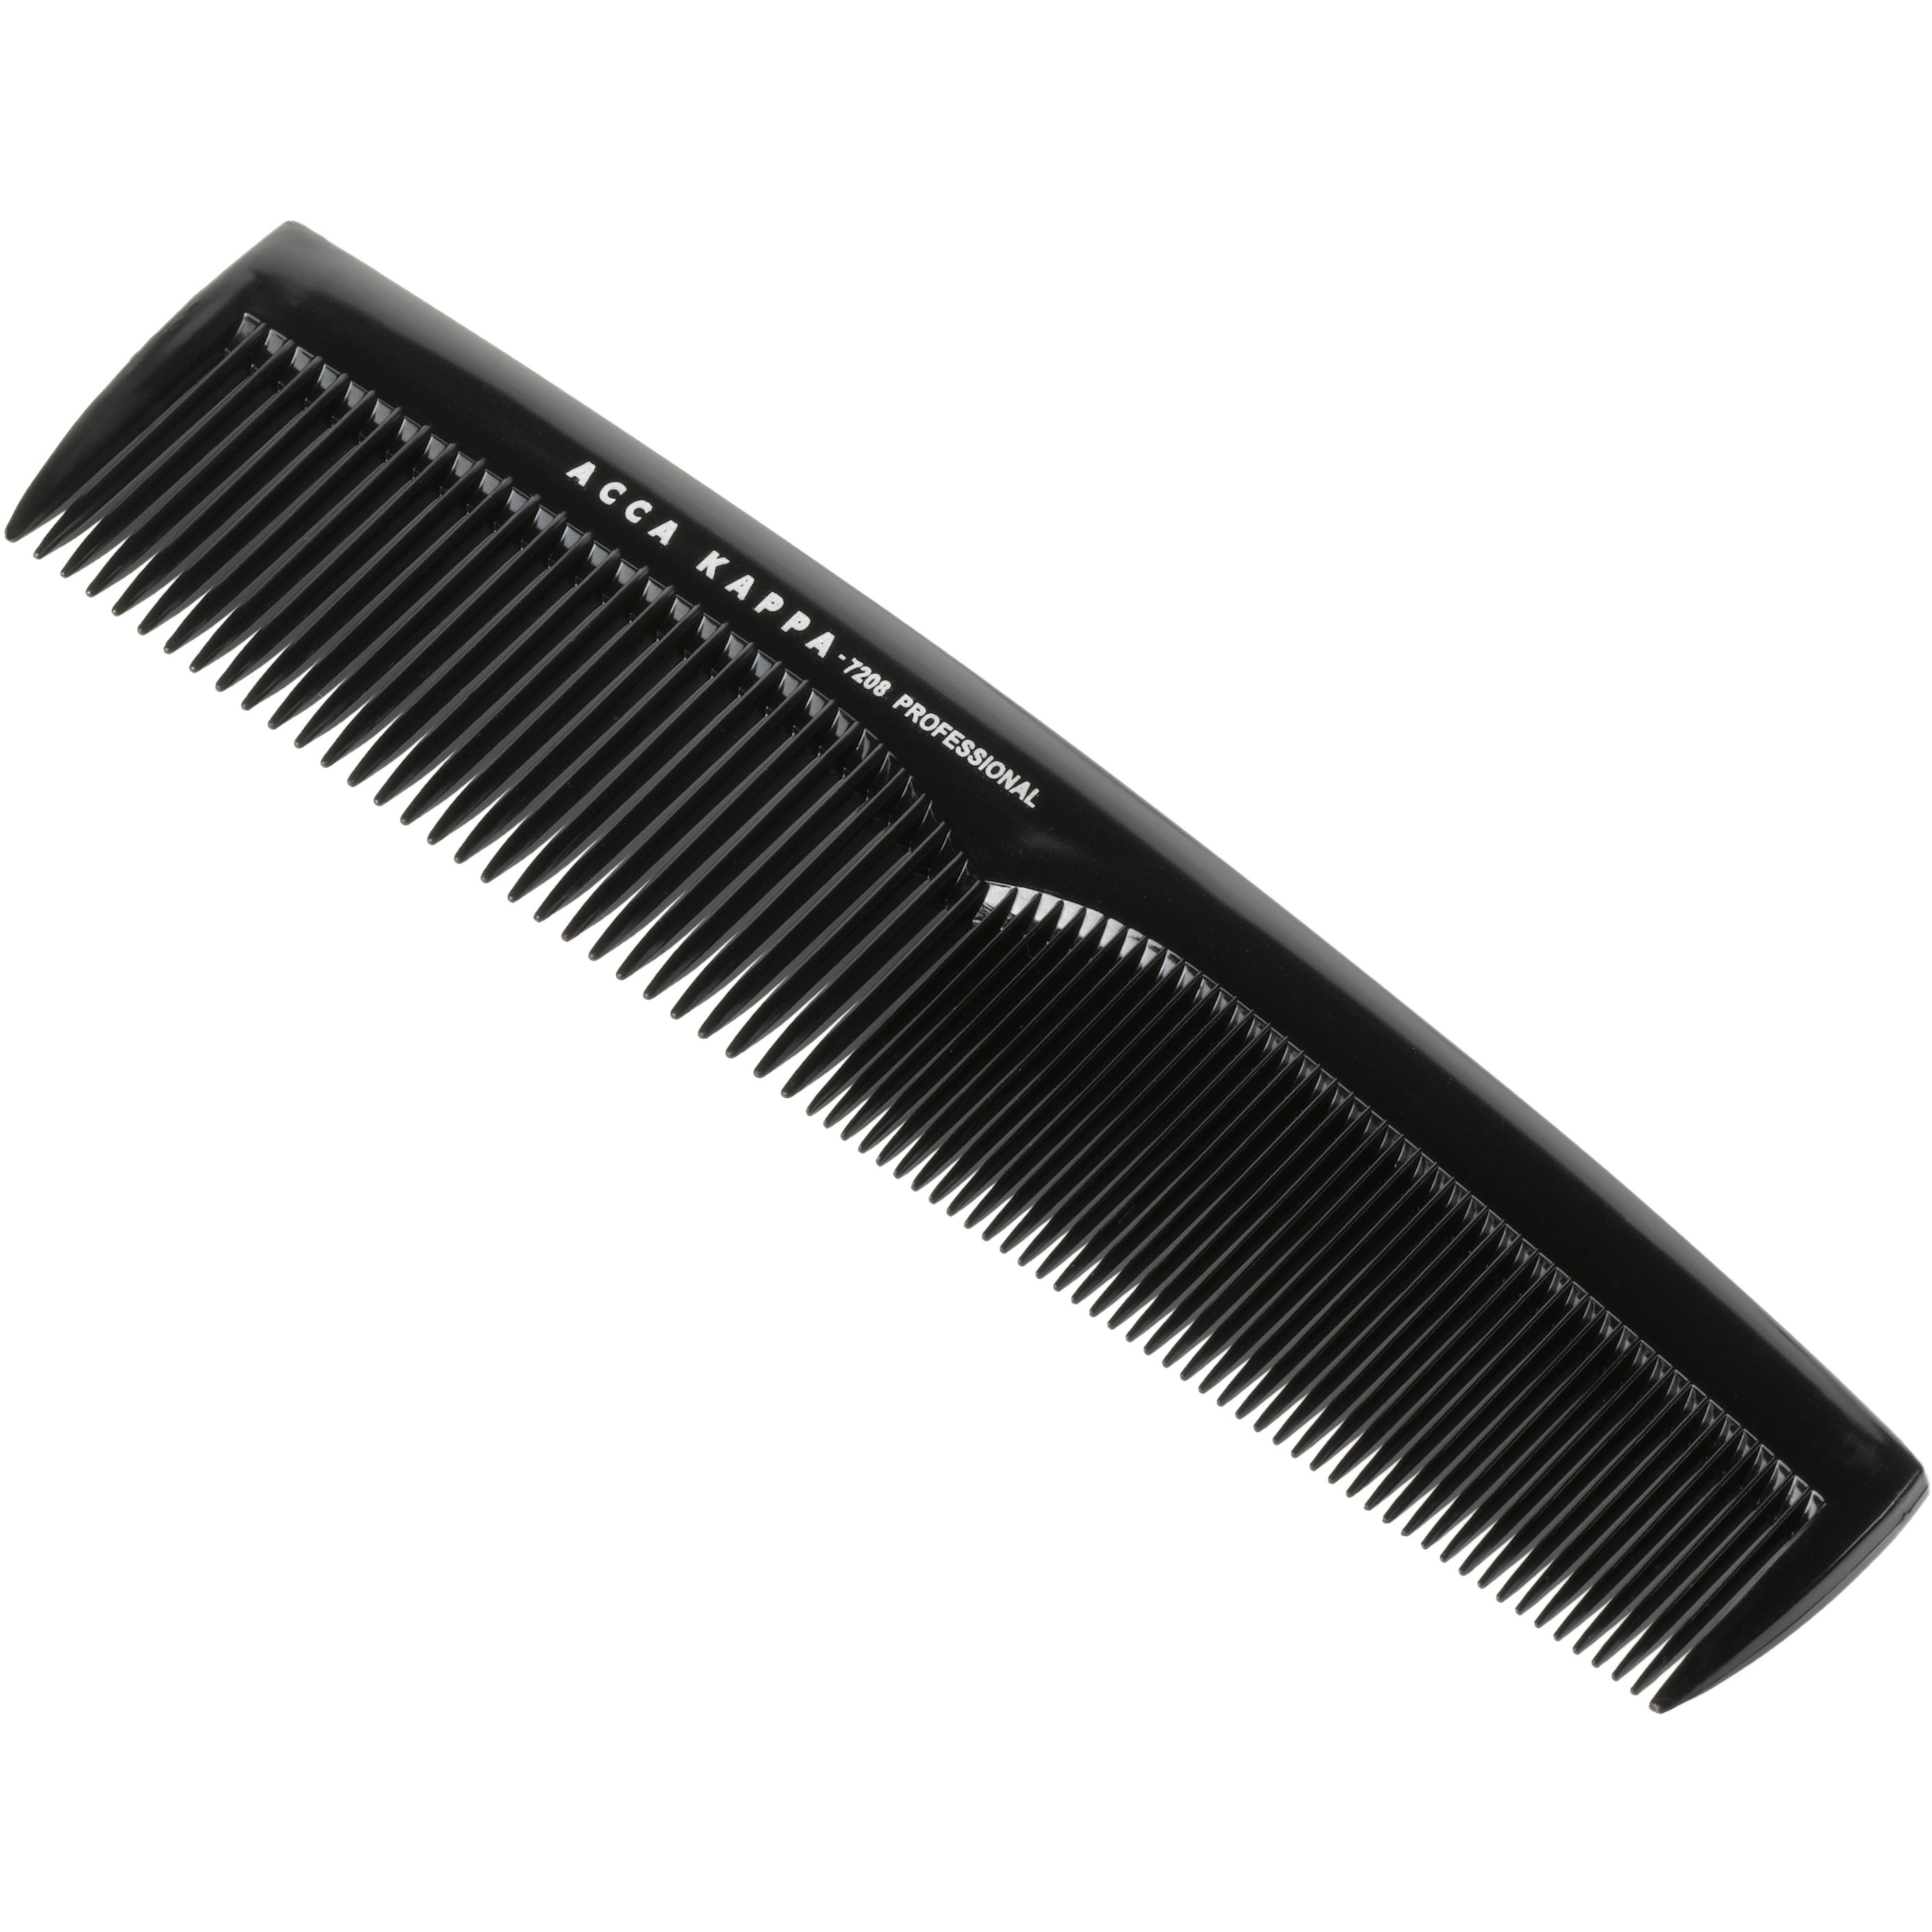 Bilde av Acca Kappa Professional Styling Fine Coarse Teeth Comb – 7208 Black